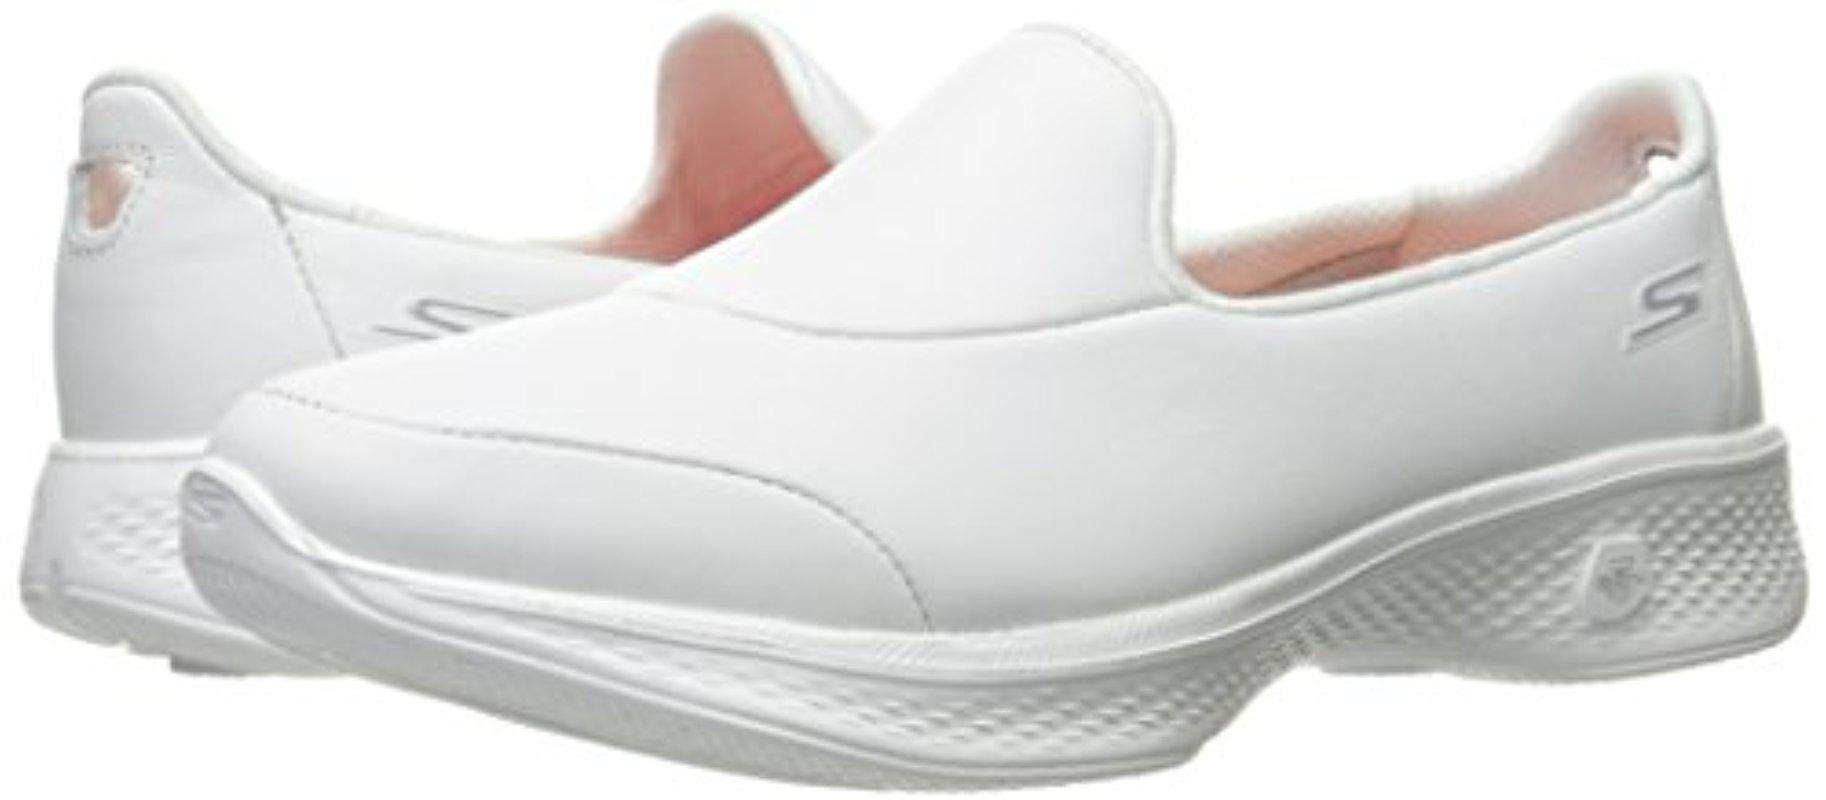 Skechers Go Walk White Leather Sale, SAVE 31% - aveclumiere.com